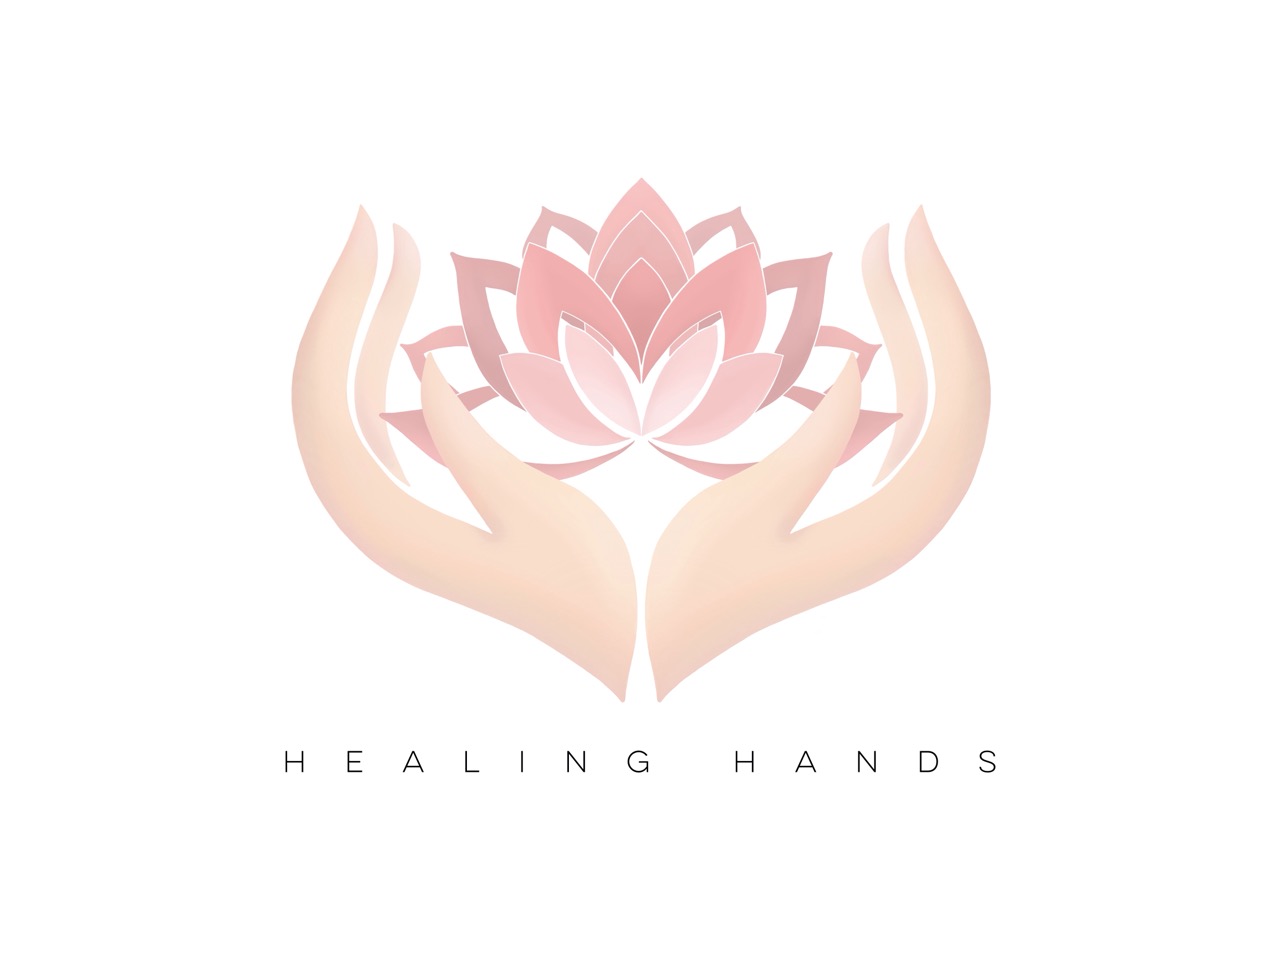 AnnCharlotts Healinghands